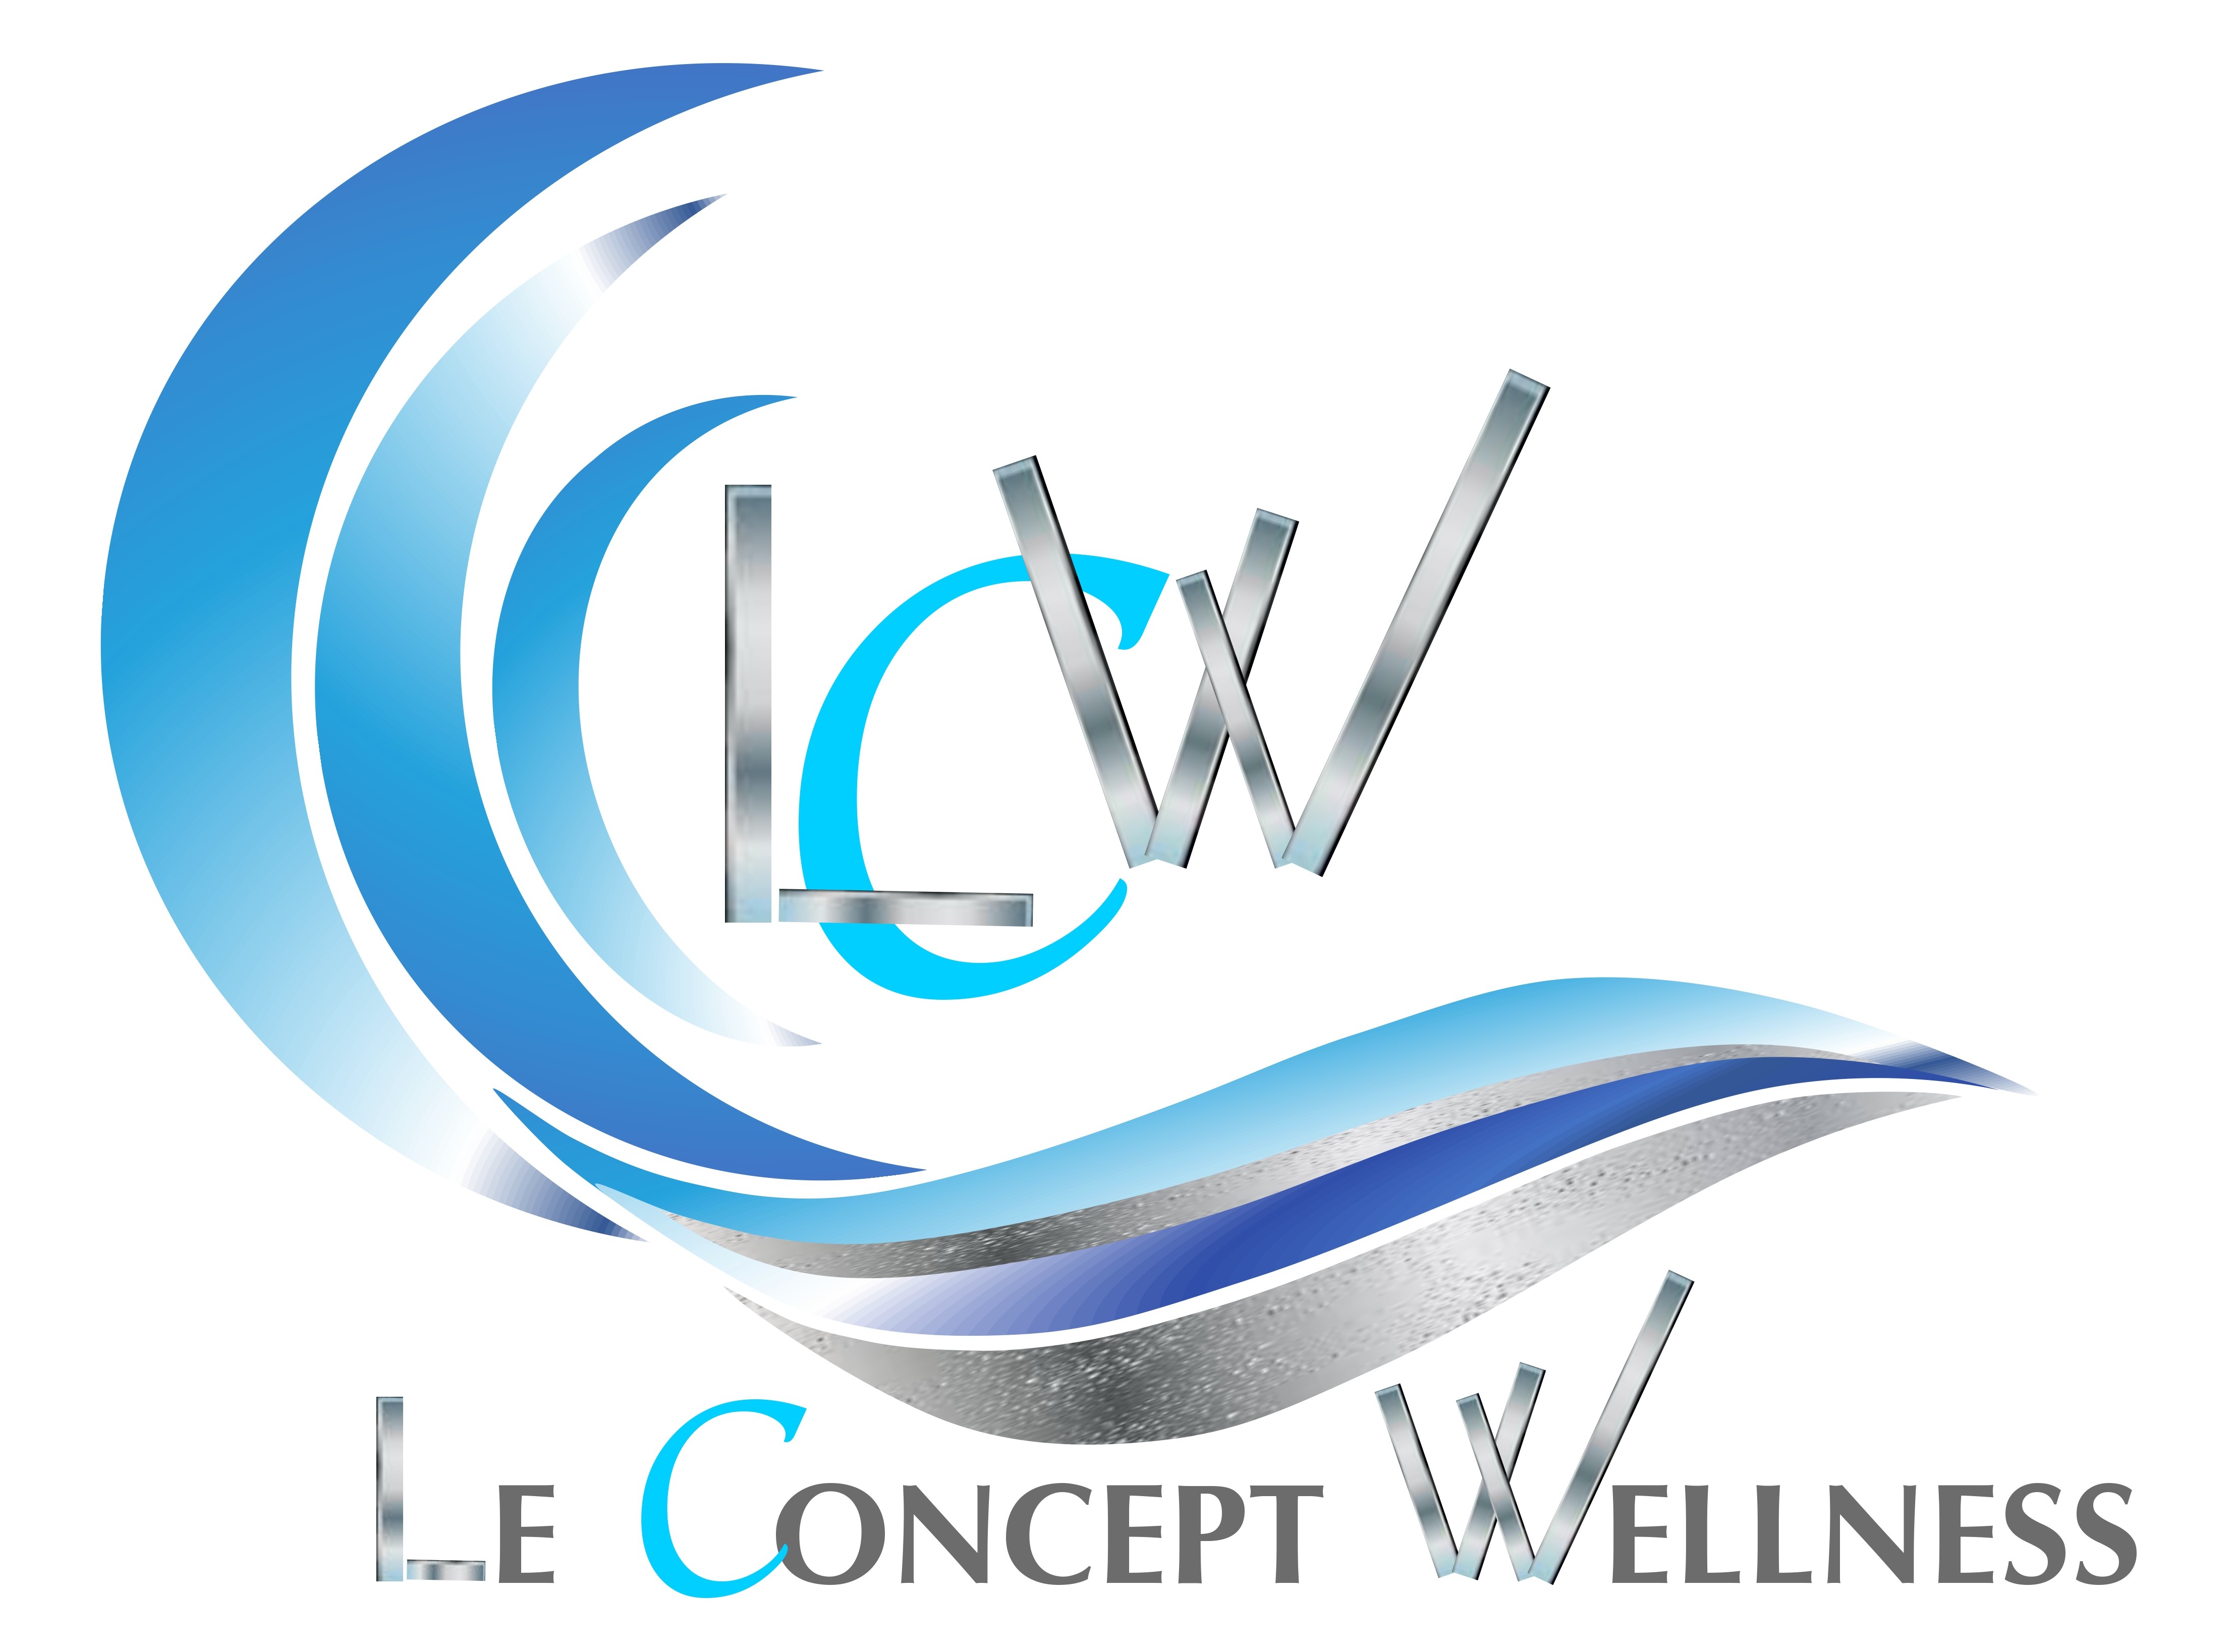 Le concept wellness